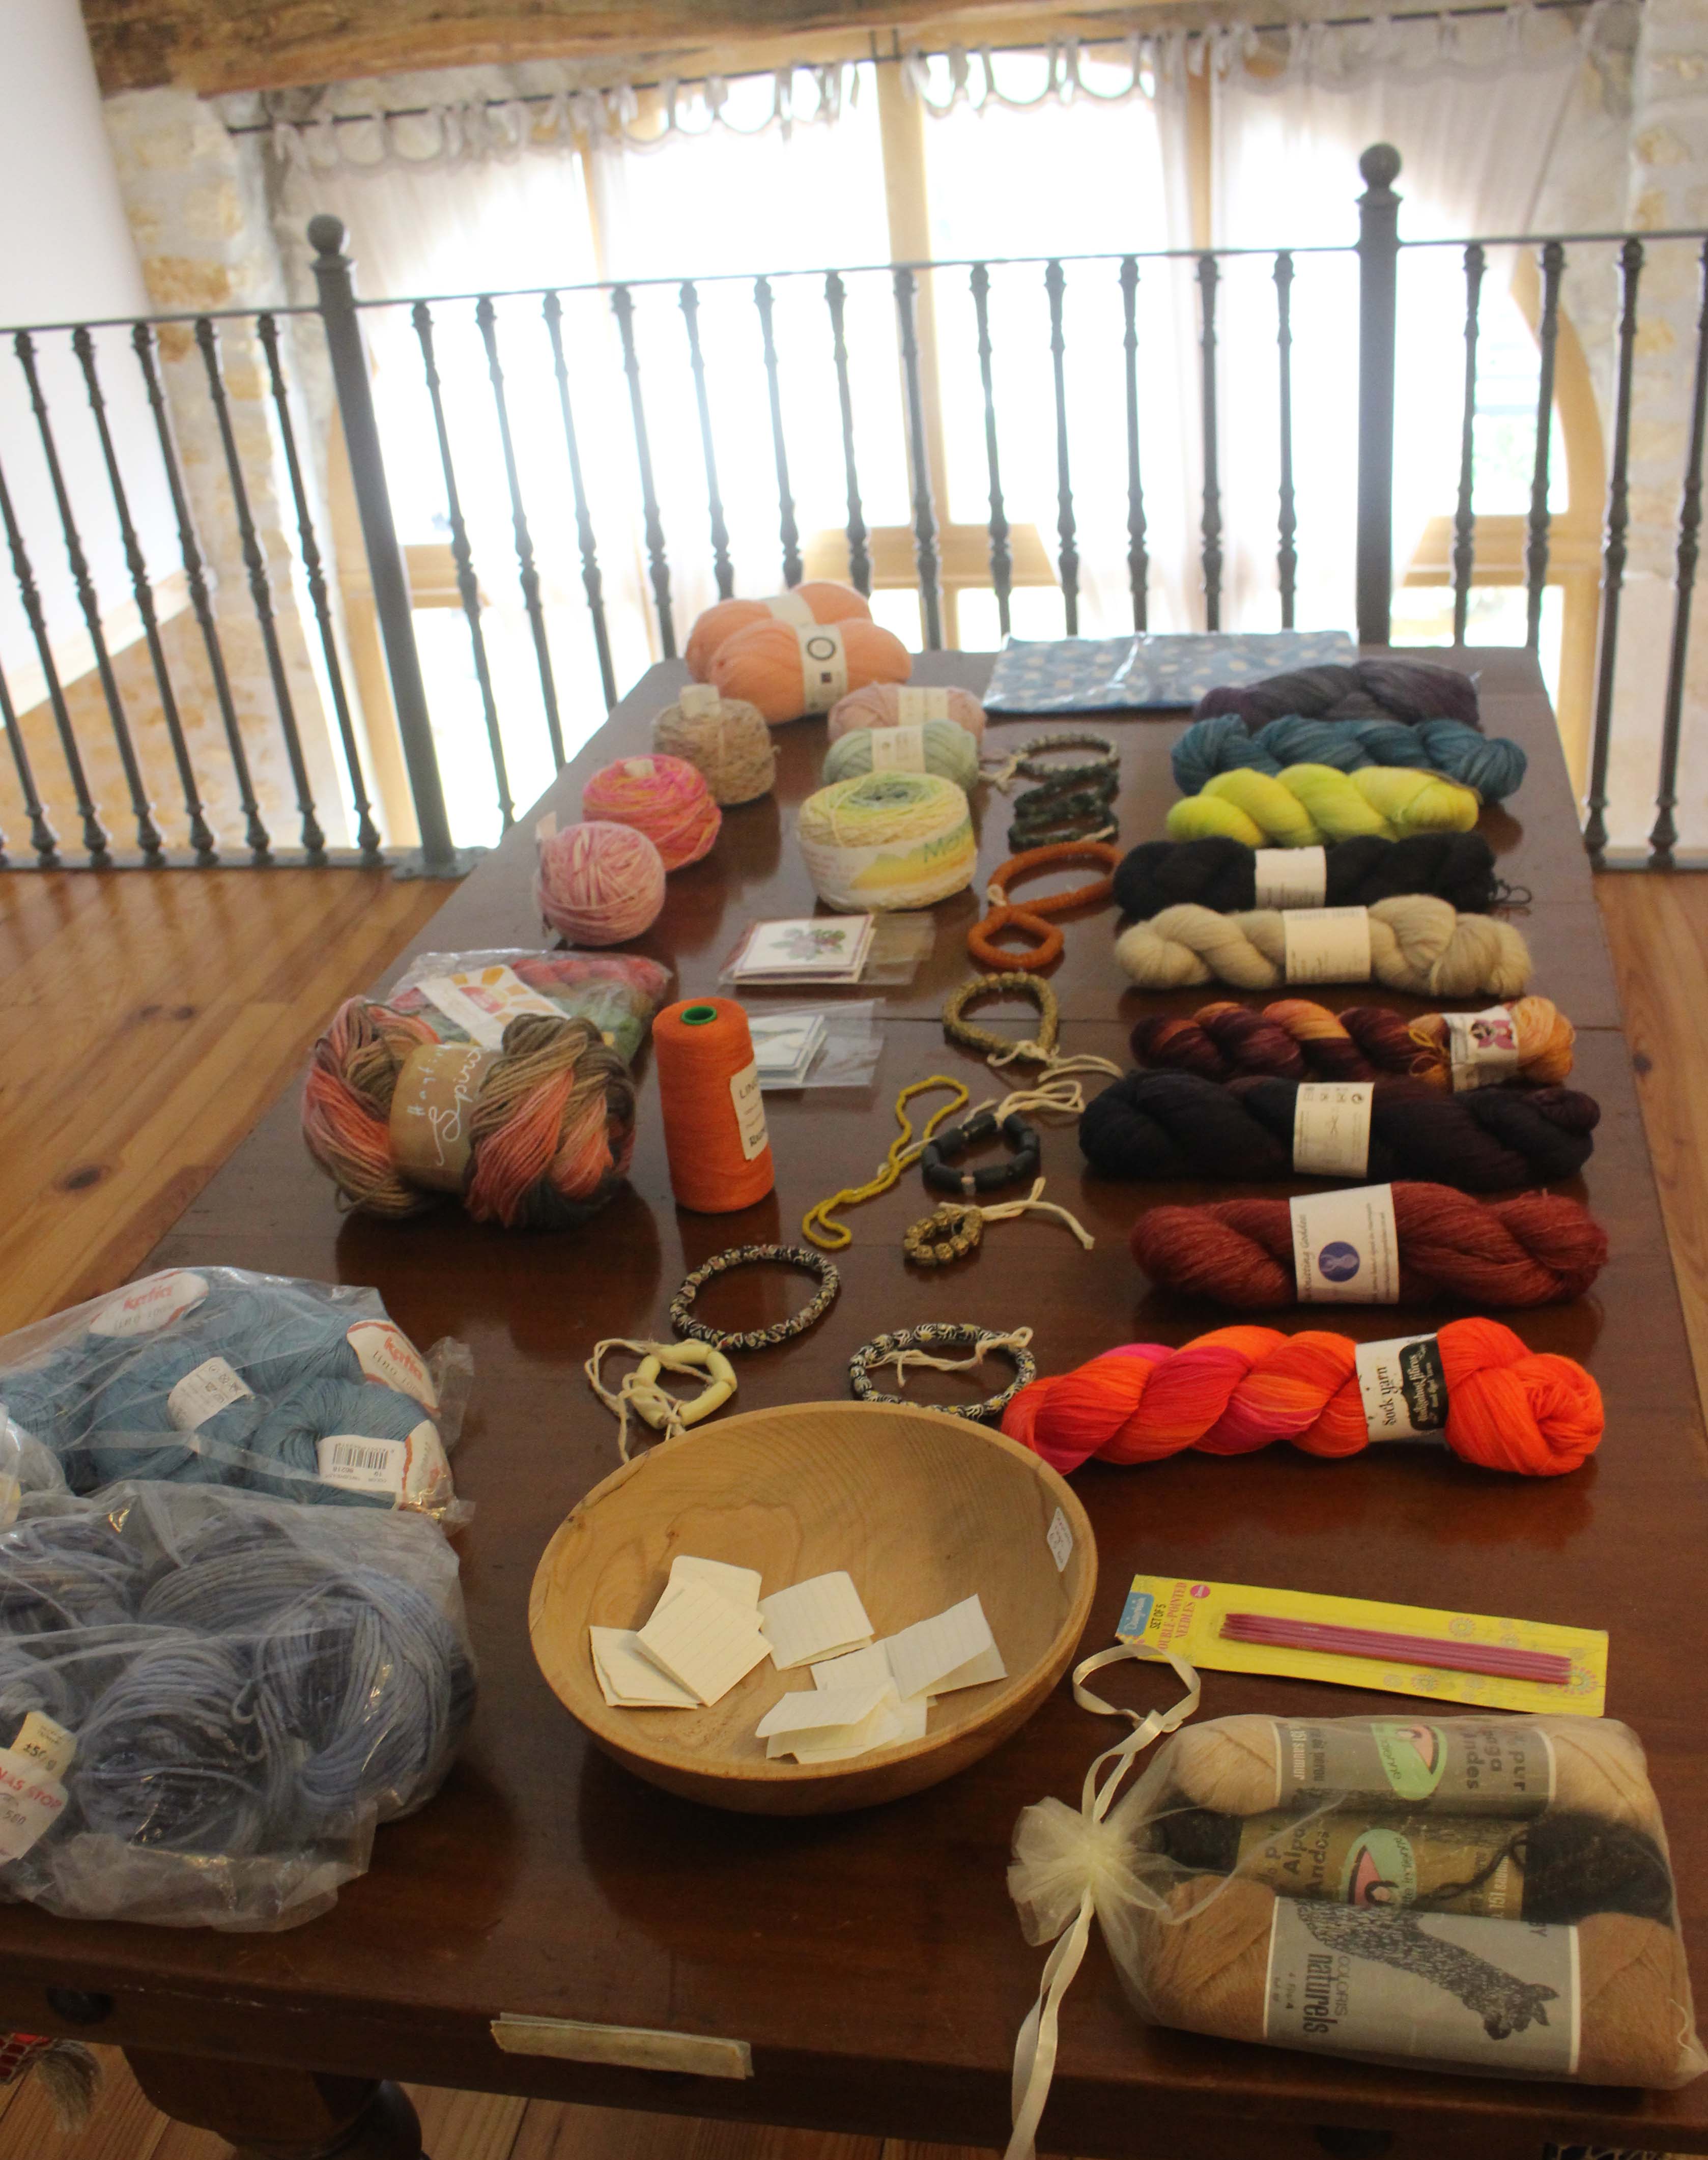 September knitting retreat - swap shop